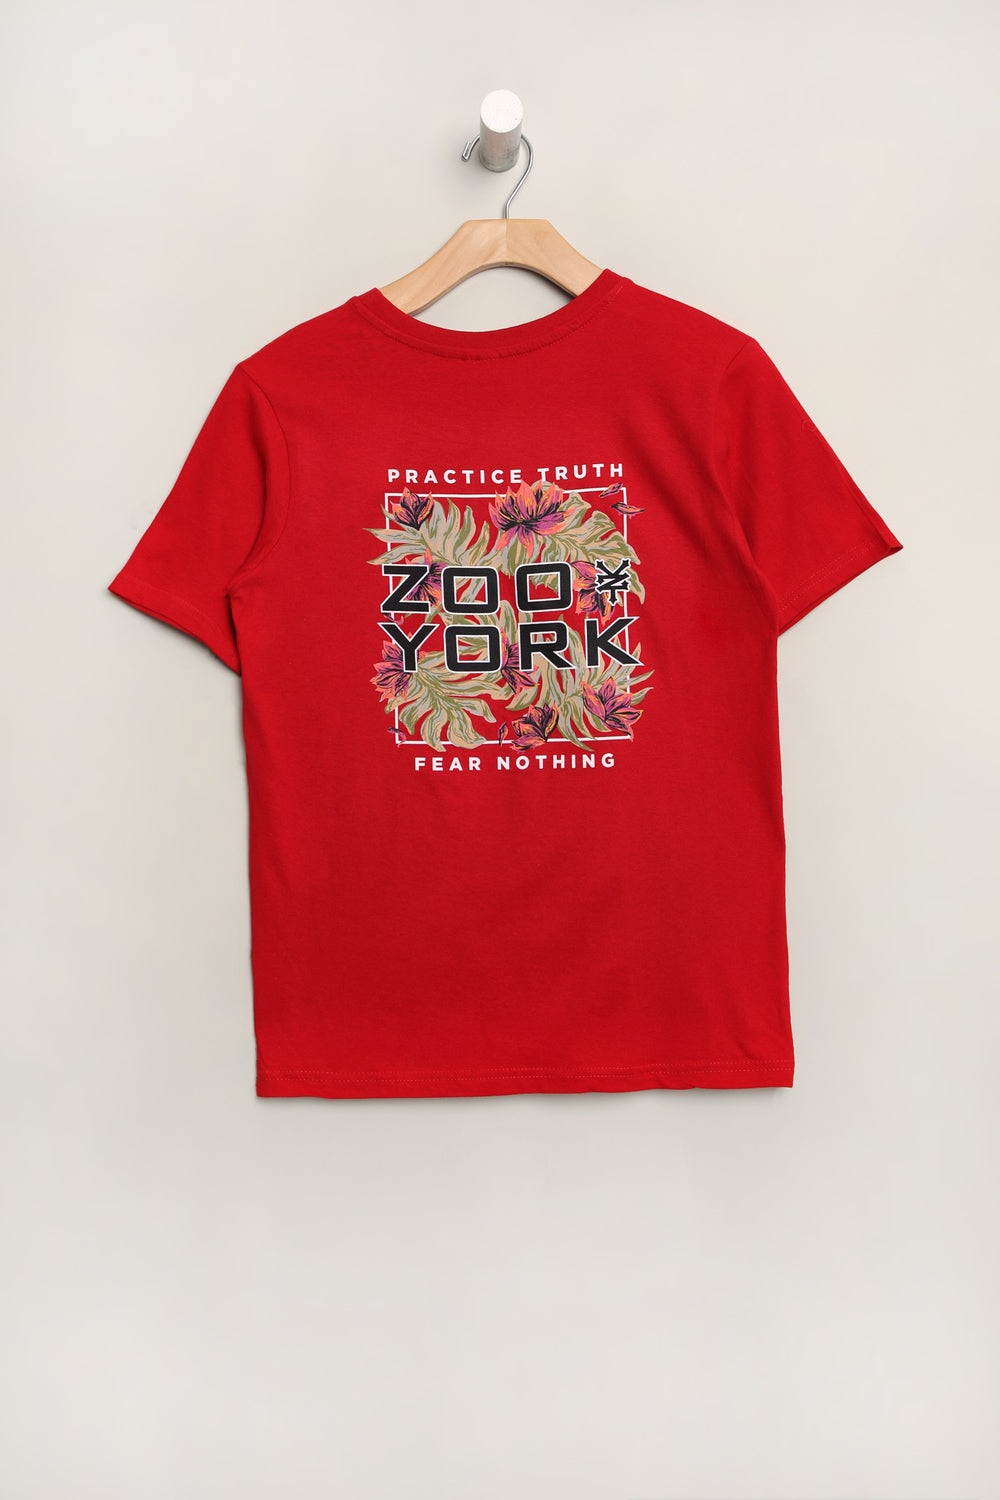 Zoo York Youth Tropical Logo T-Shirt Zoo York Youth Tropical Logo T-Shirt